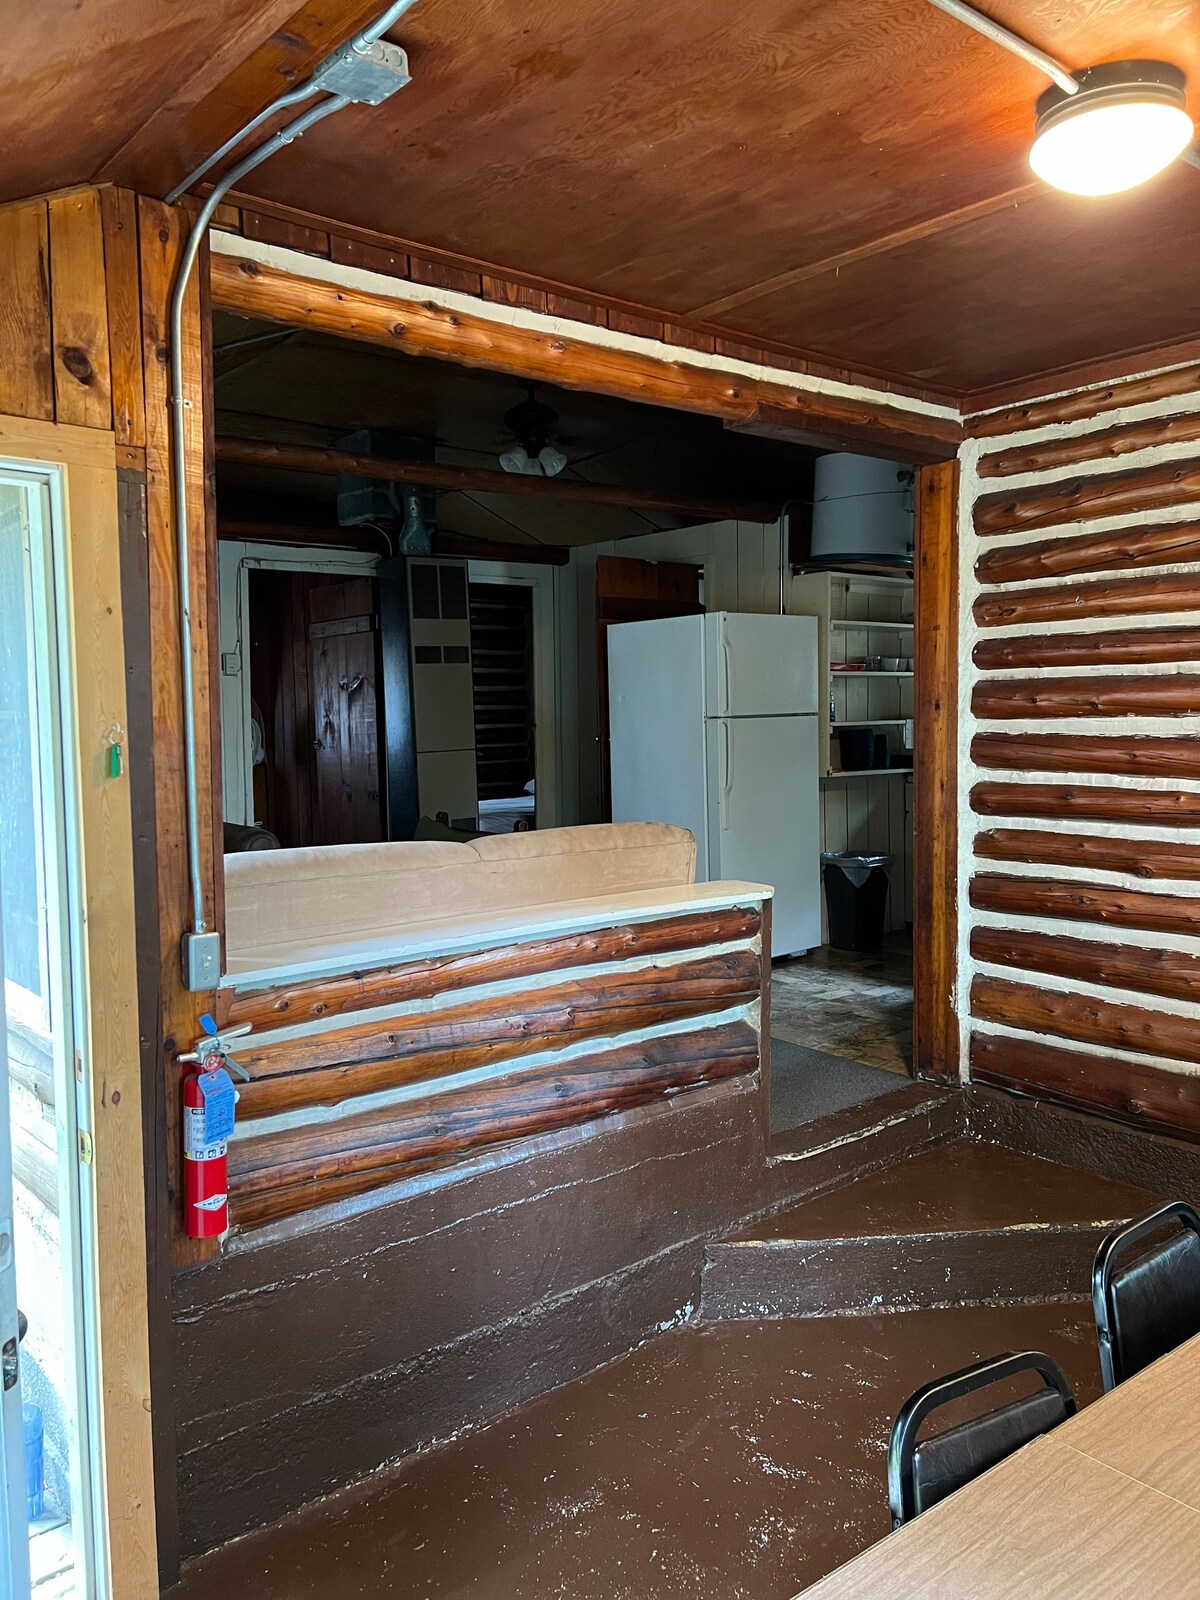 # 9 Lakefront rustic 3 BR cabin with private bath